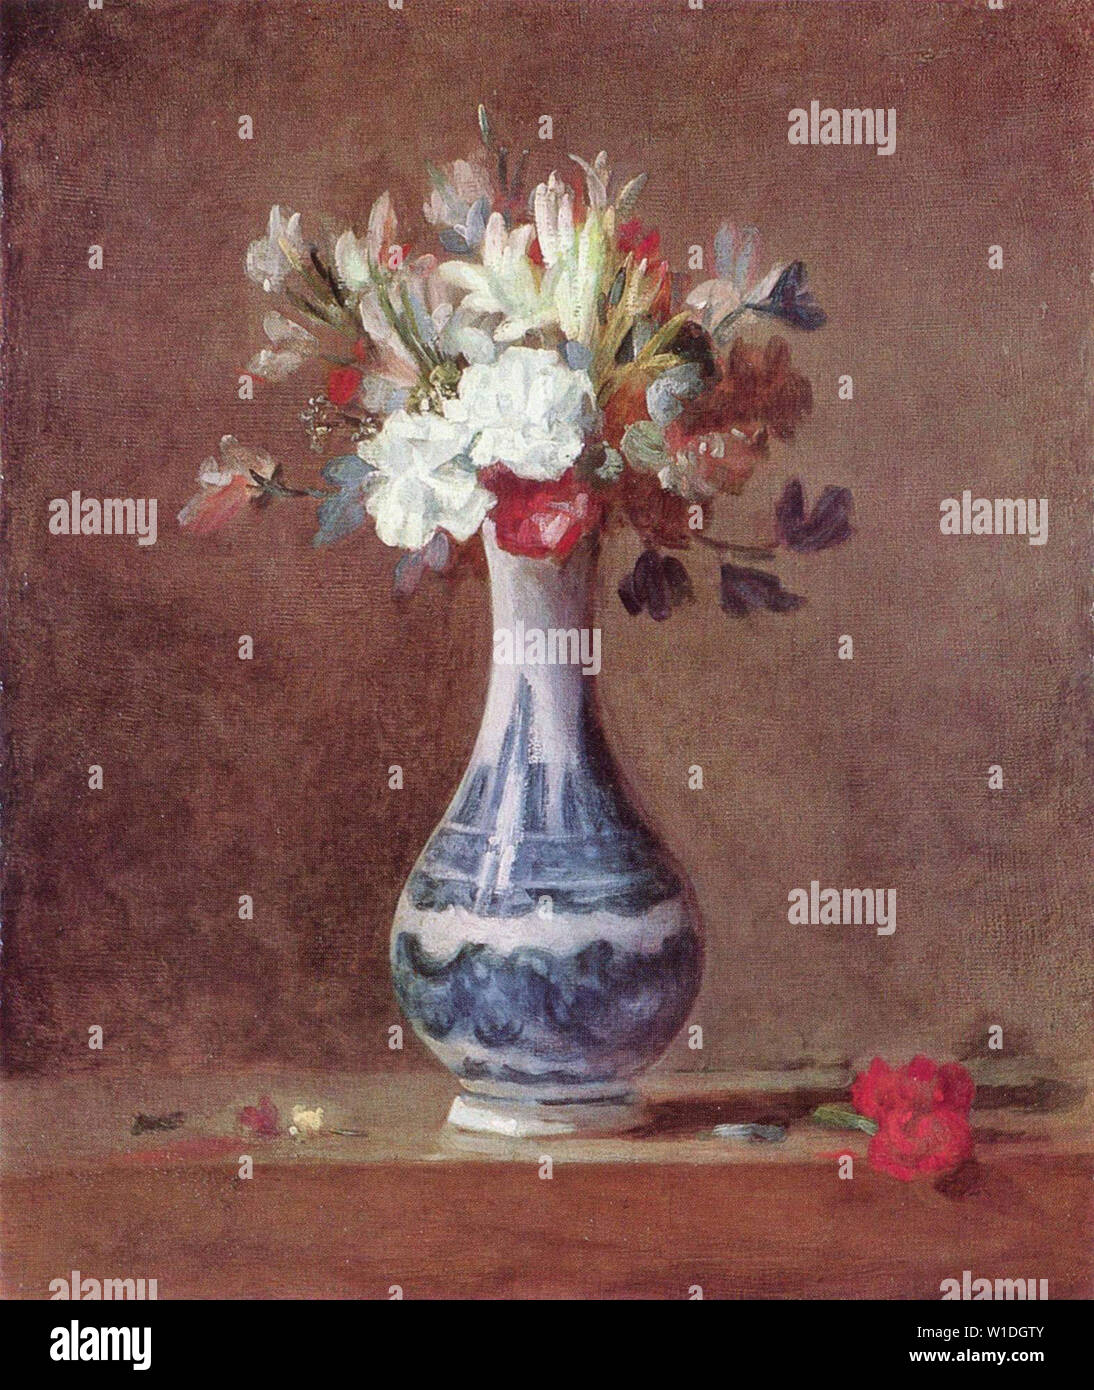 3,006 Still Life Bouquet Lilac Vase Stock Photos - Free & Royalty